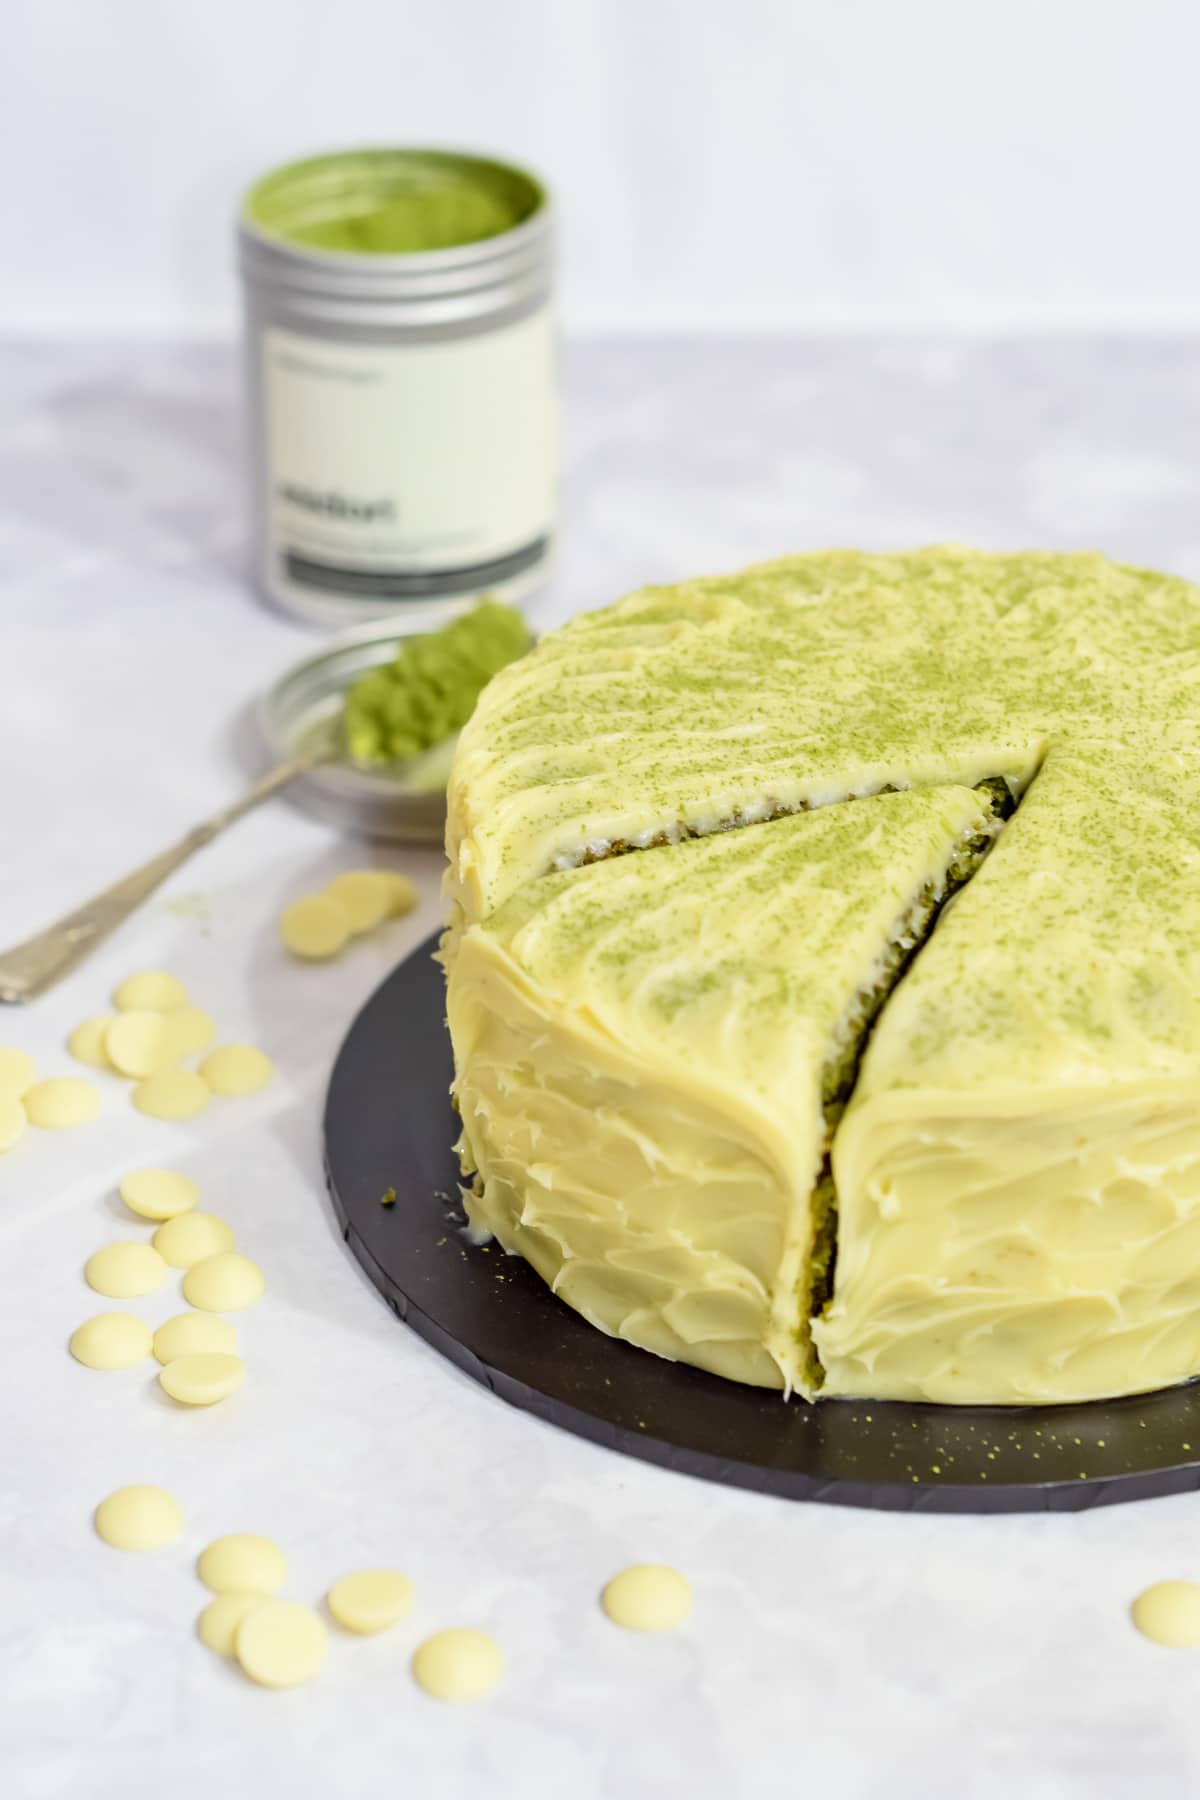 easy matcha green tea cake with white chocolate ganache frosting and matcha powder